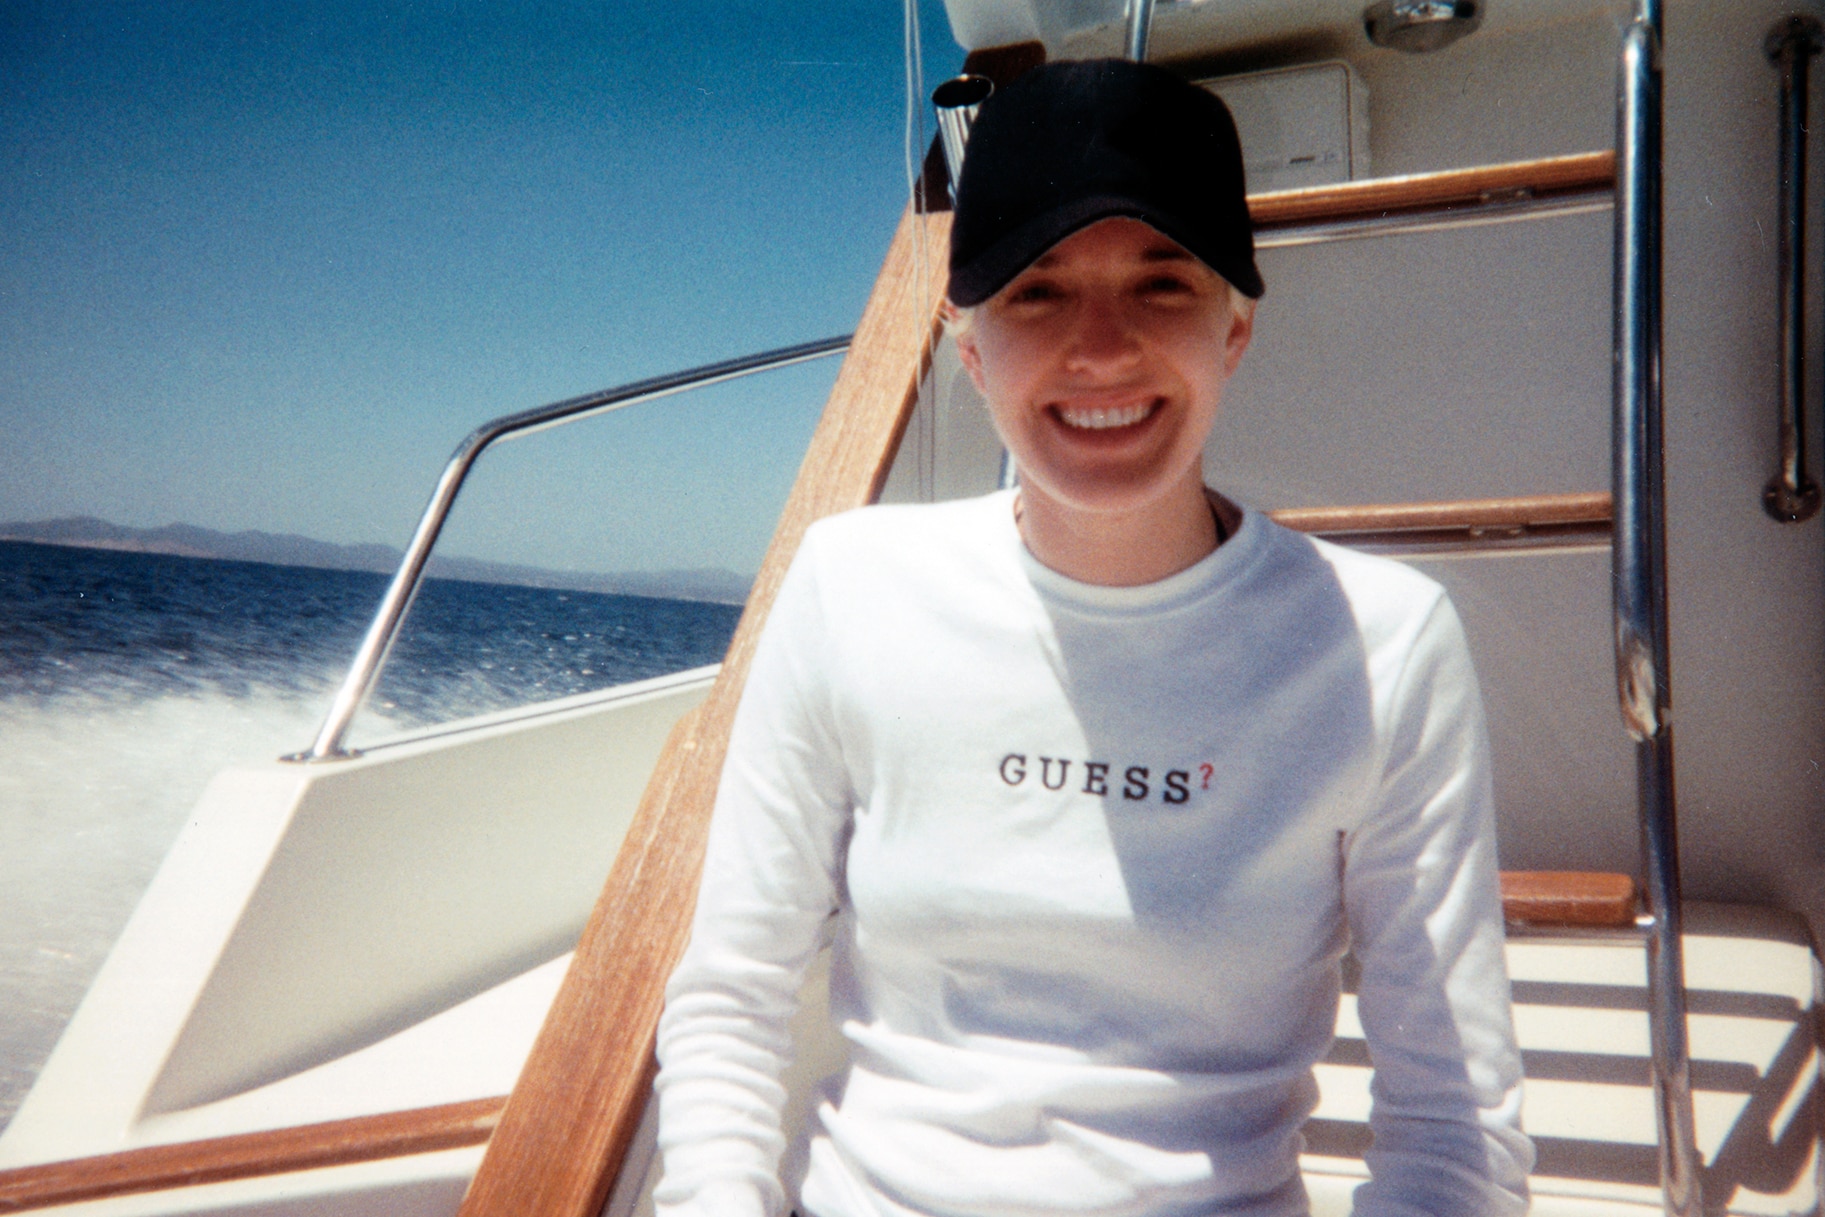 Erika Jayne smiling on a boat